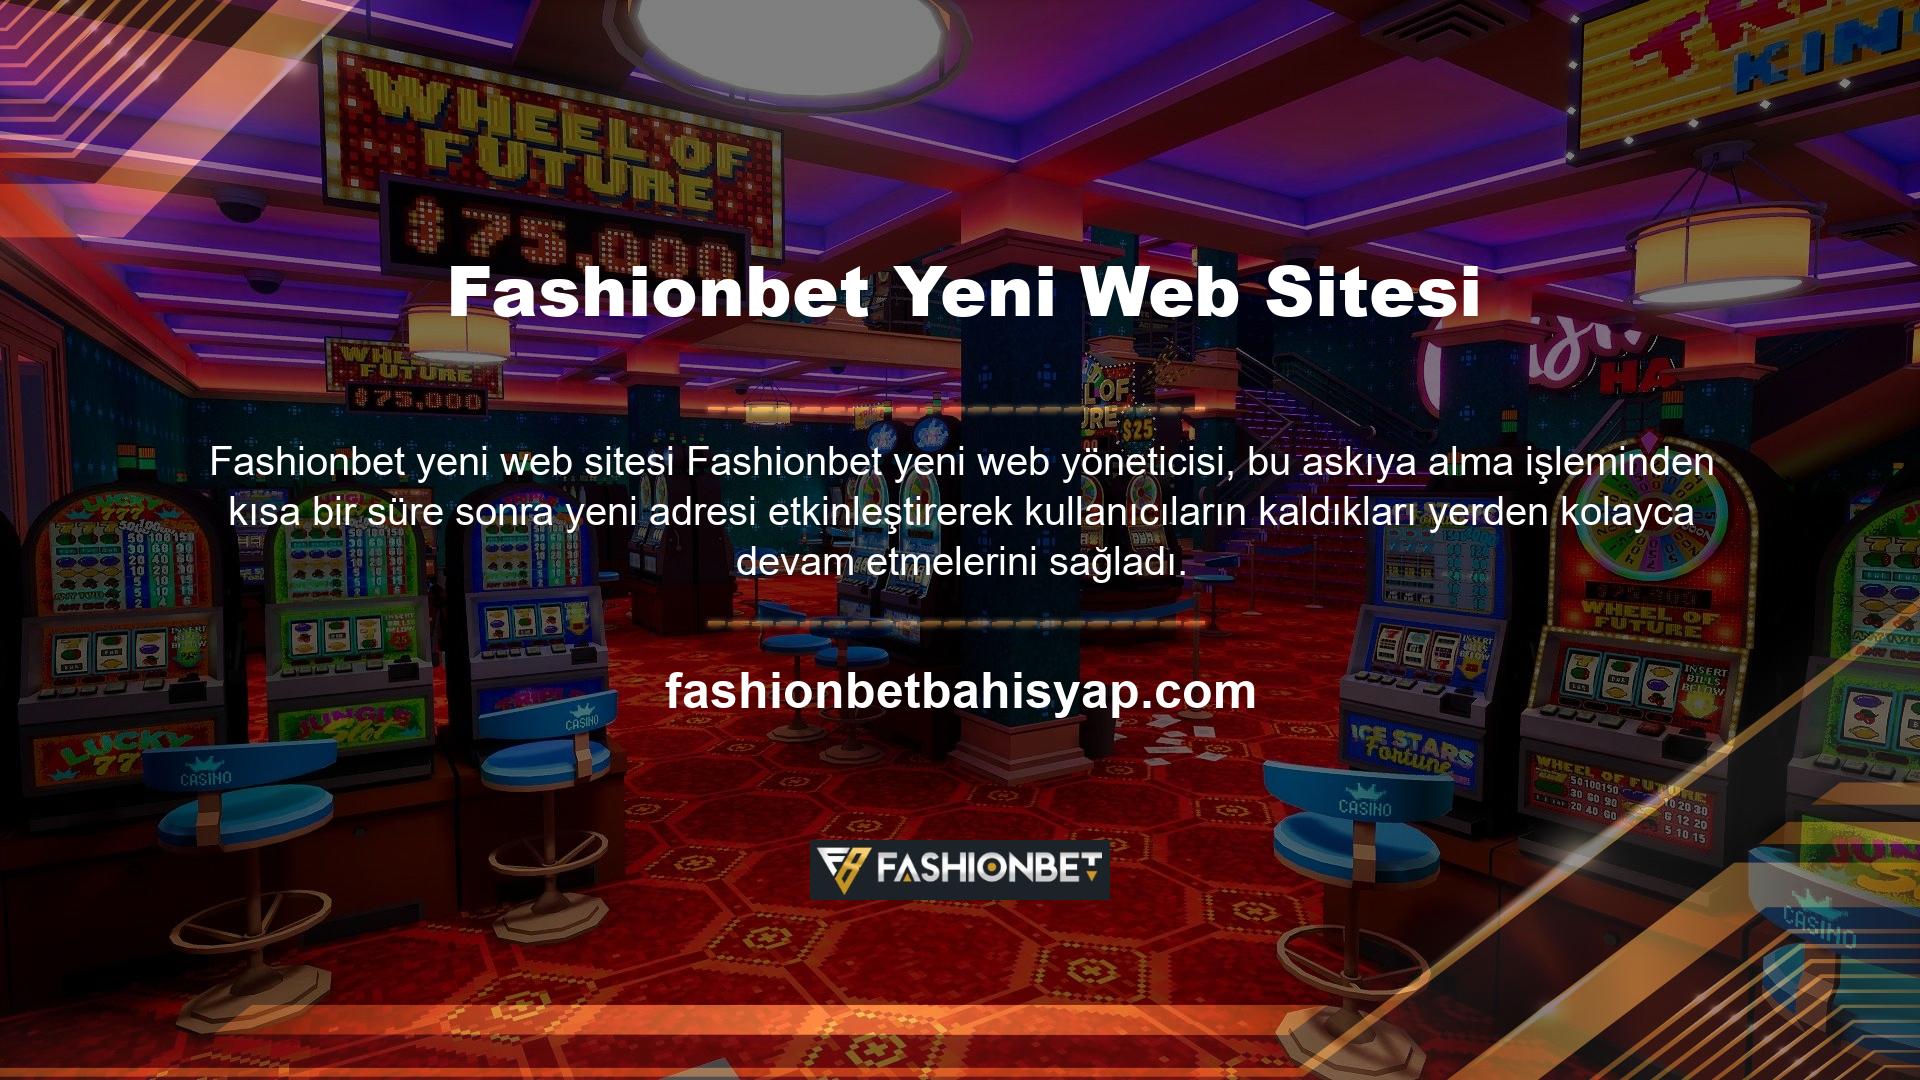 Fashionbet yeni web sitesi